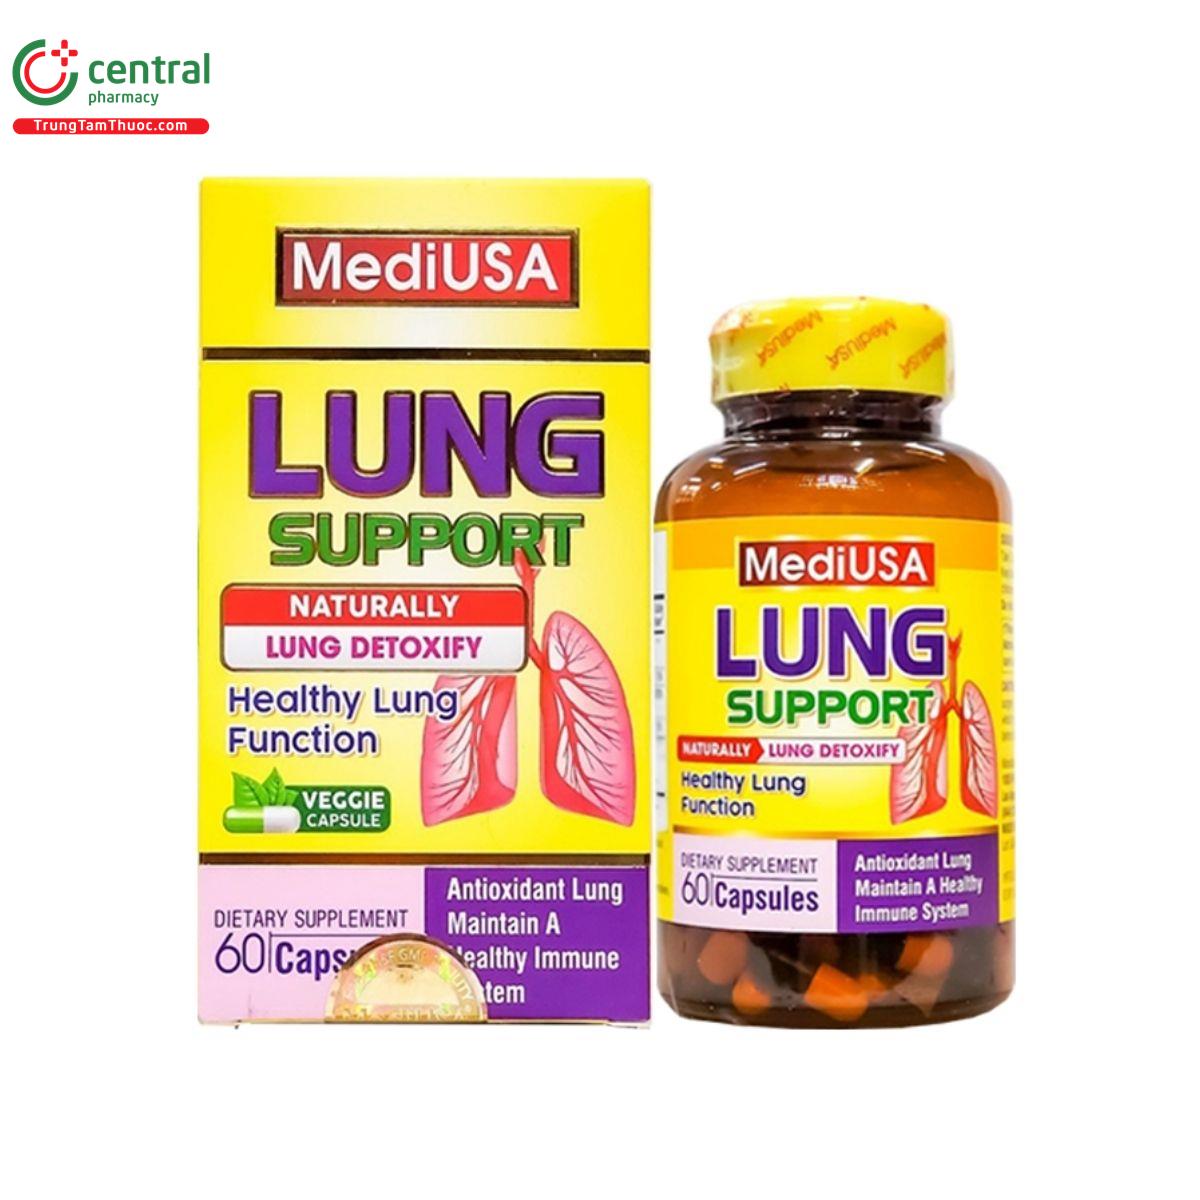 lung support mediusa 1 L4180